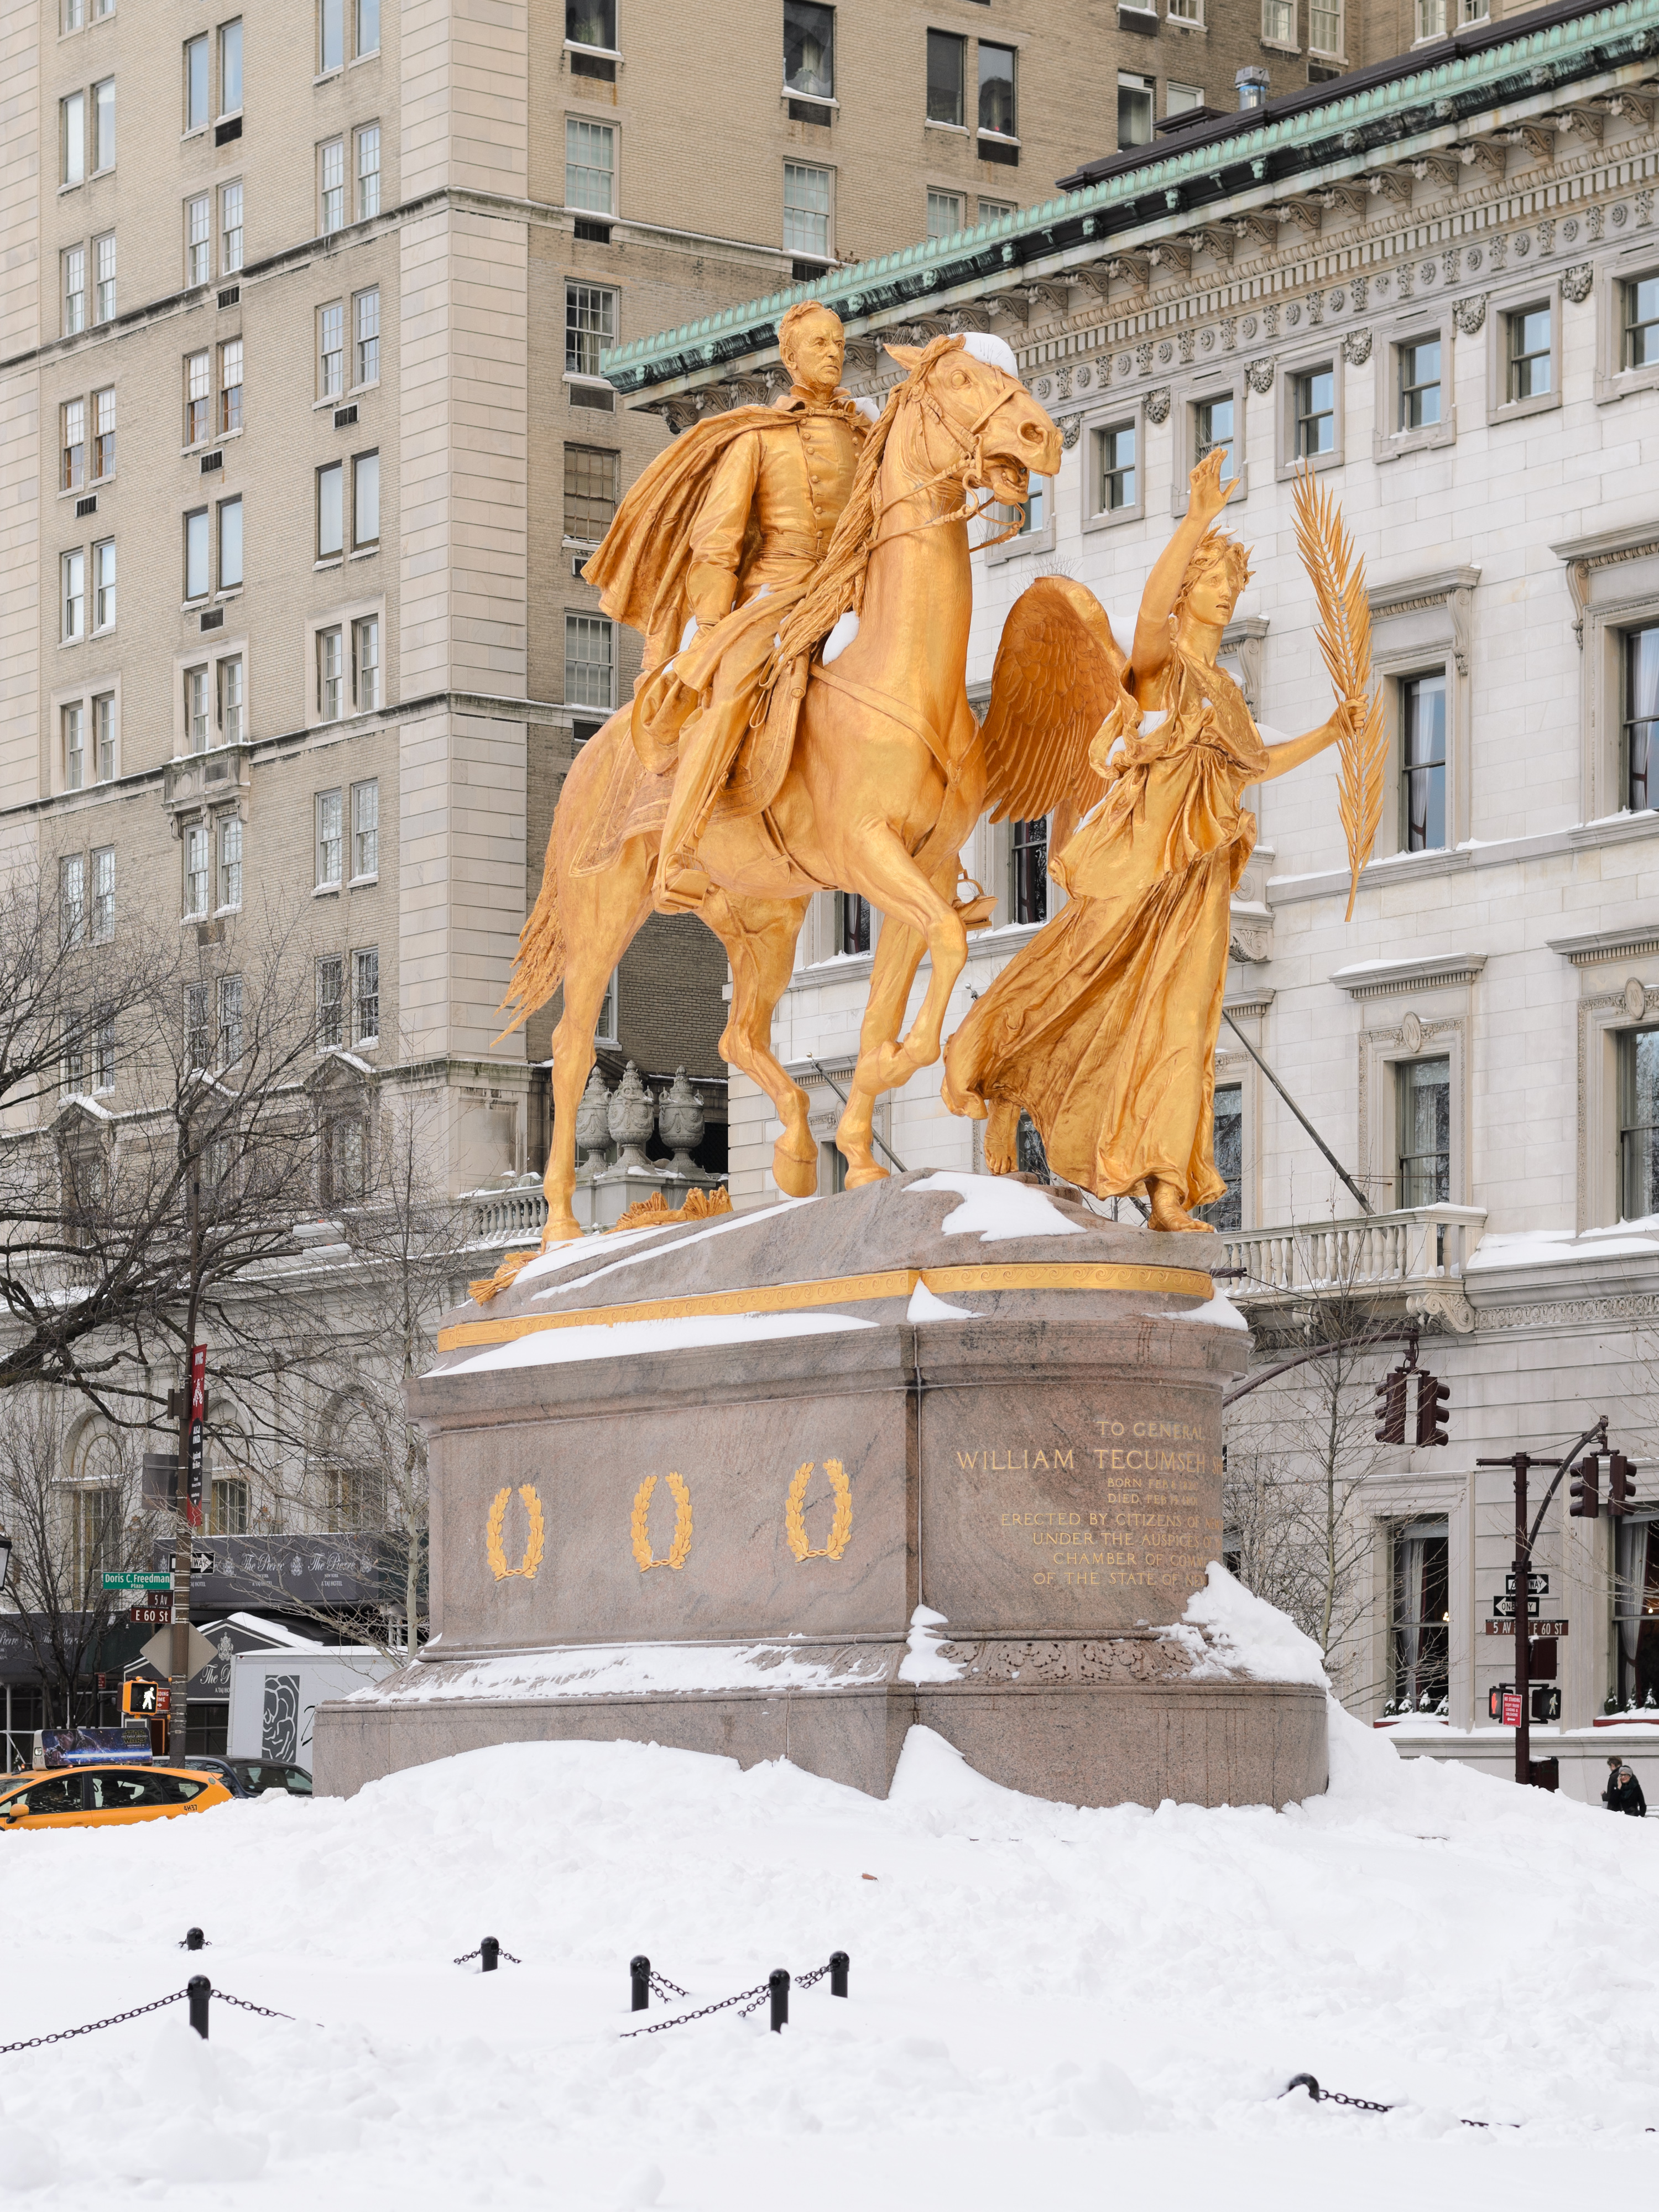 William Tecumseh Sherman Monument New York January 2016 002